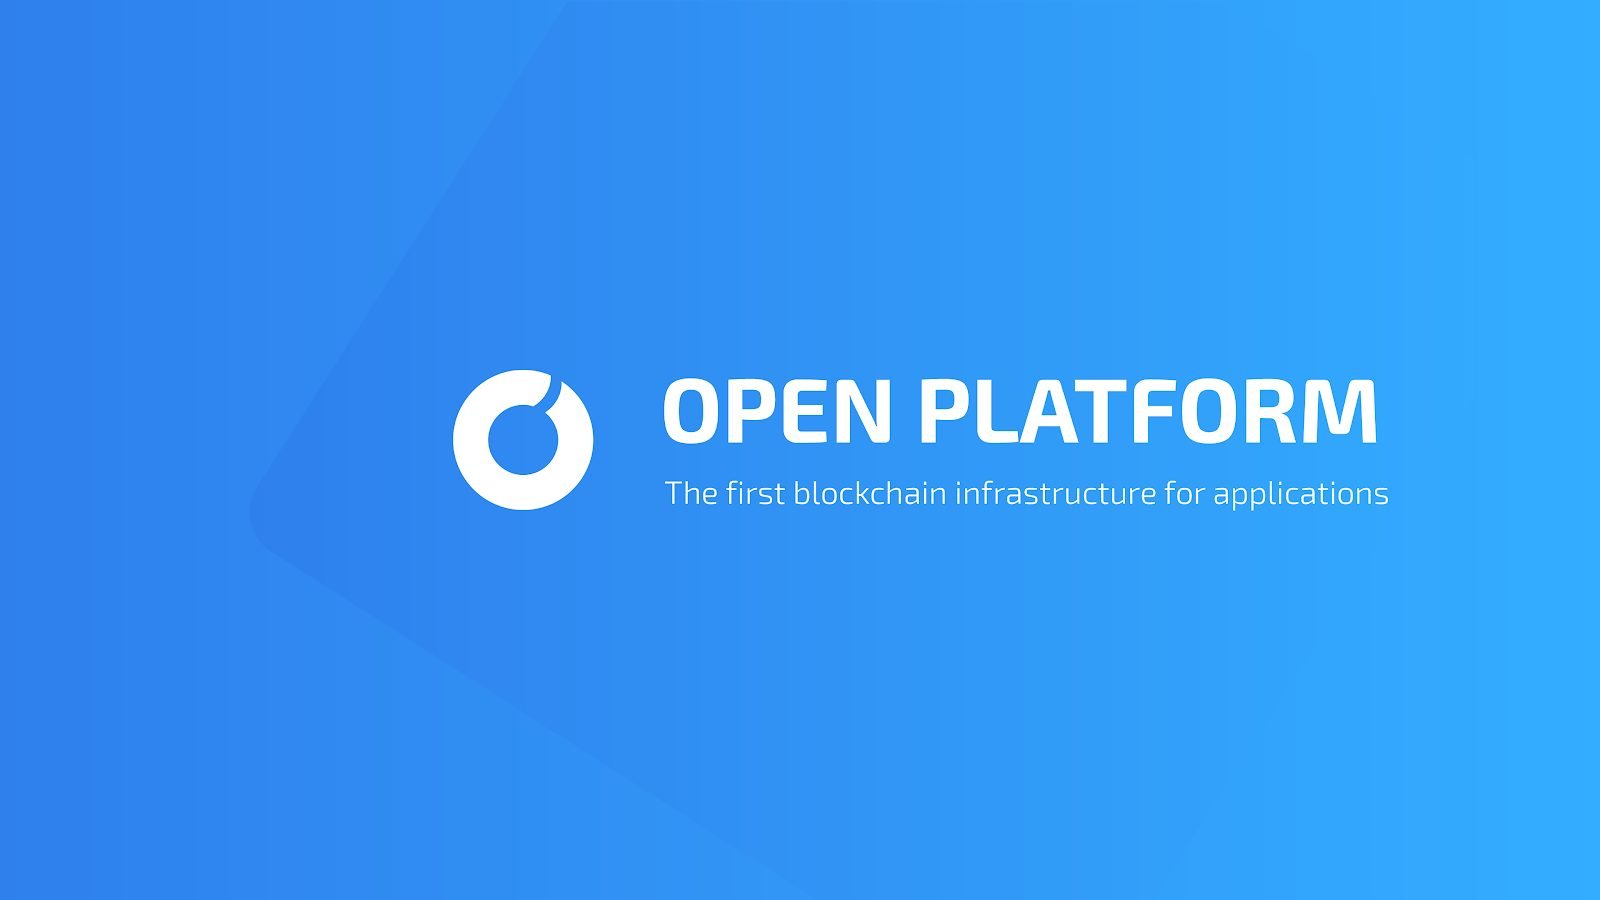 Open platform kucoin 0.0017 btc to pkr